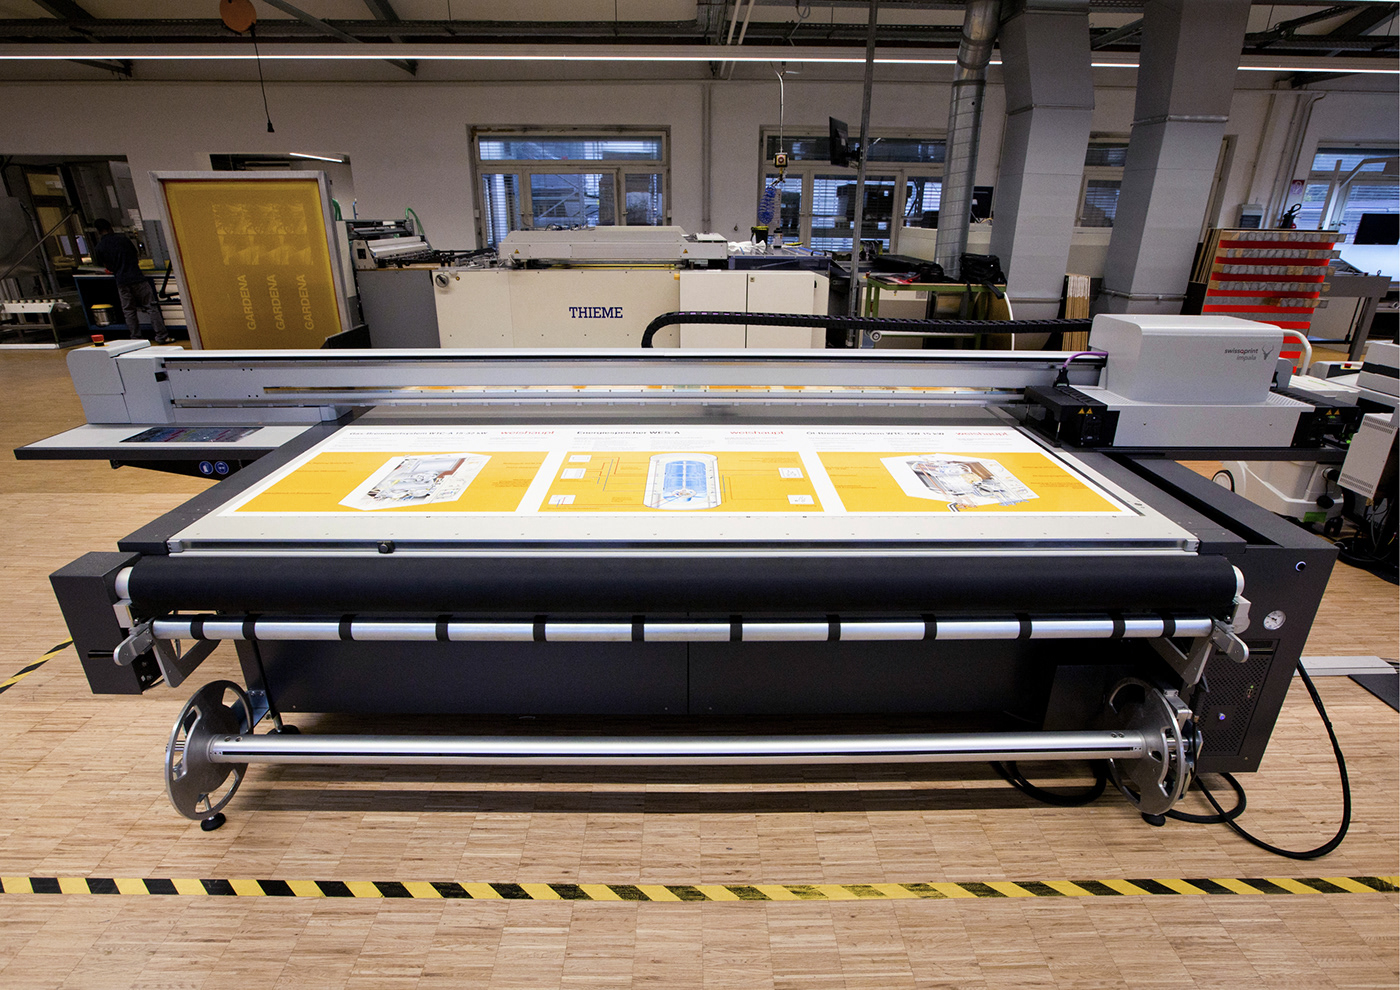 screen printing Printing design typo branding  Corporate Design typografie grafik fotografie print